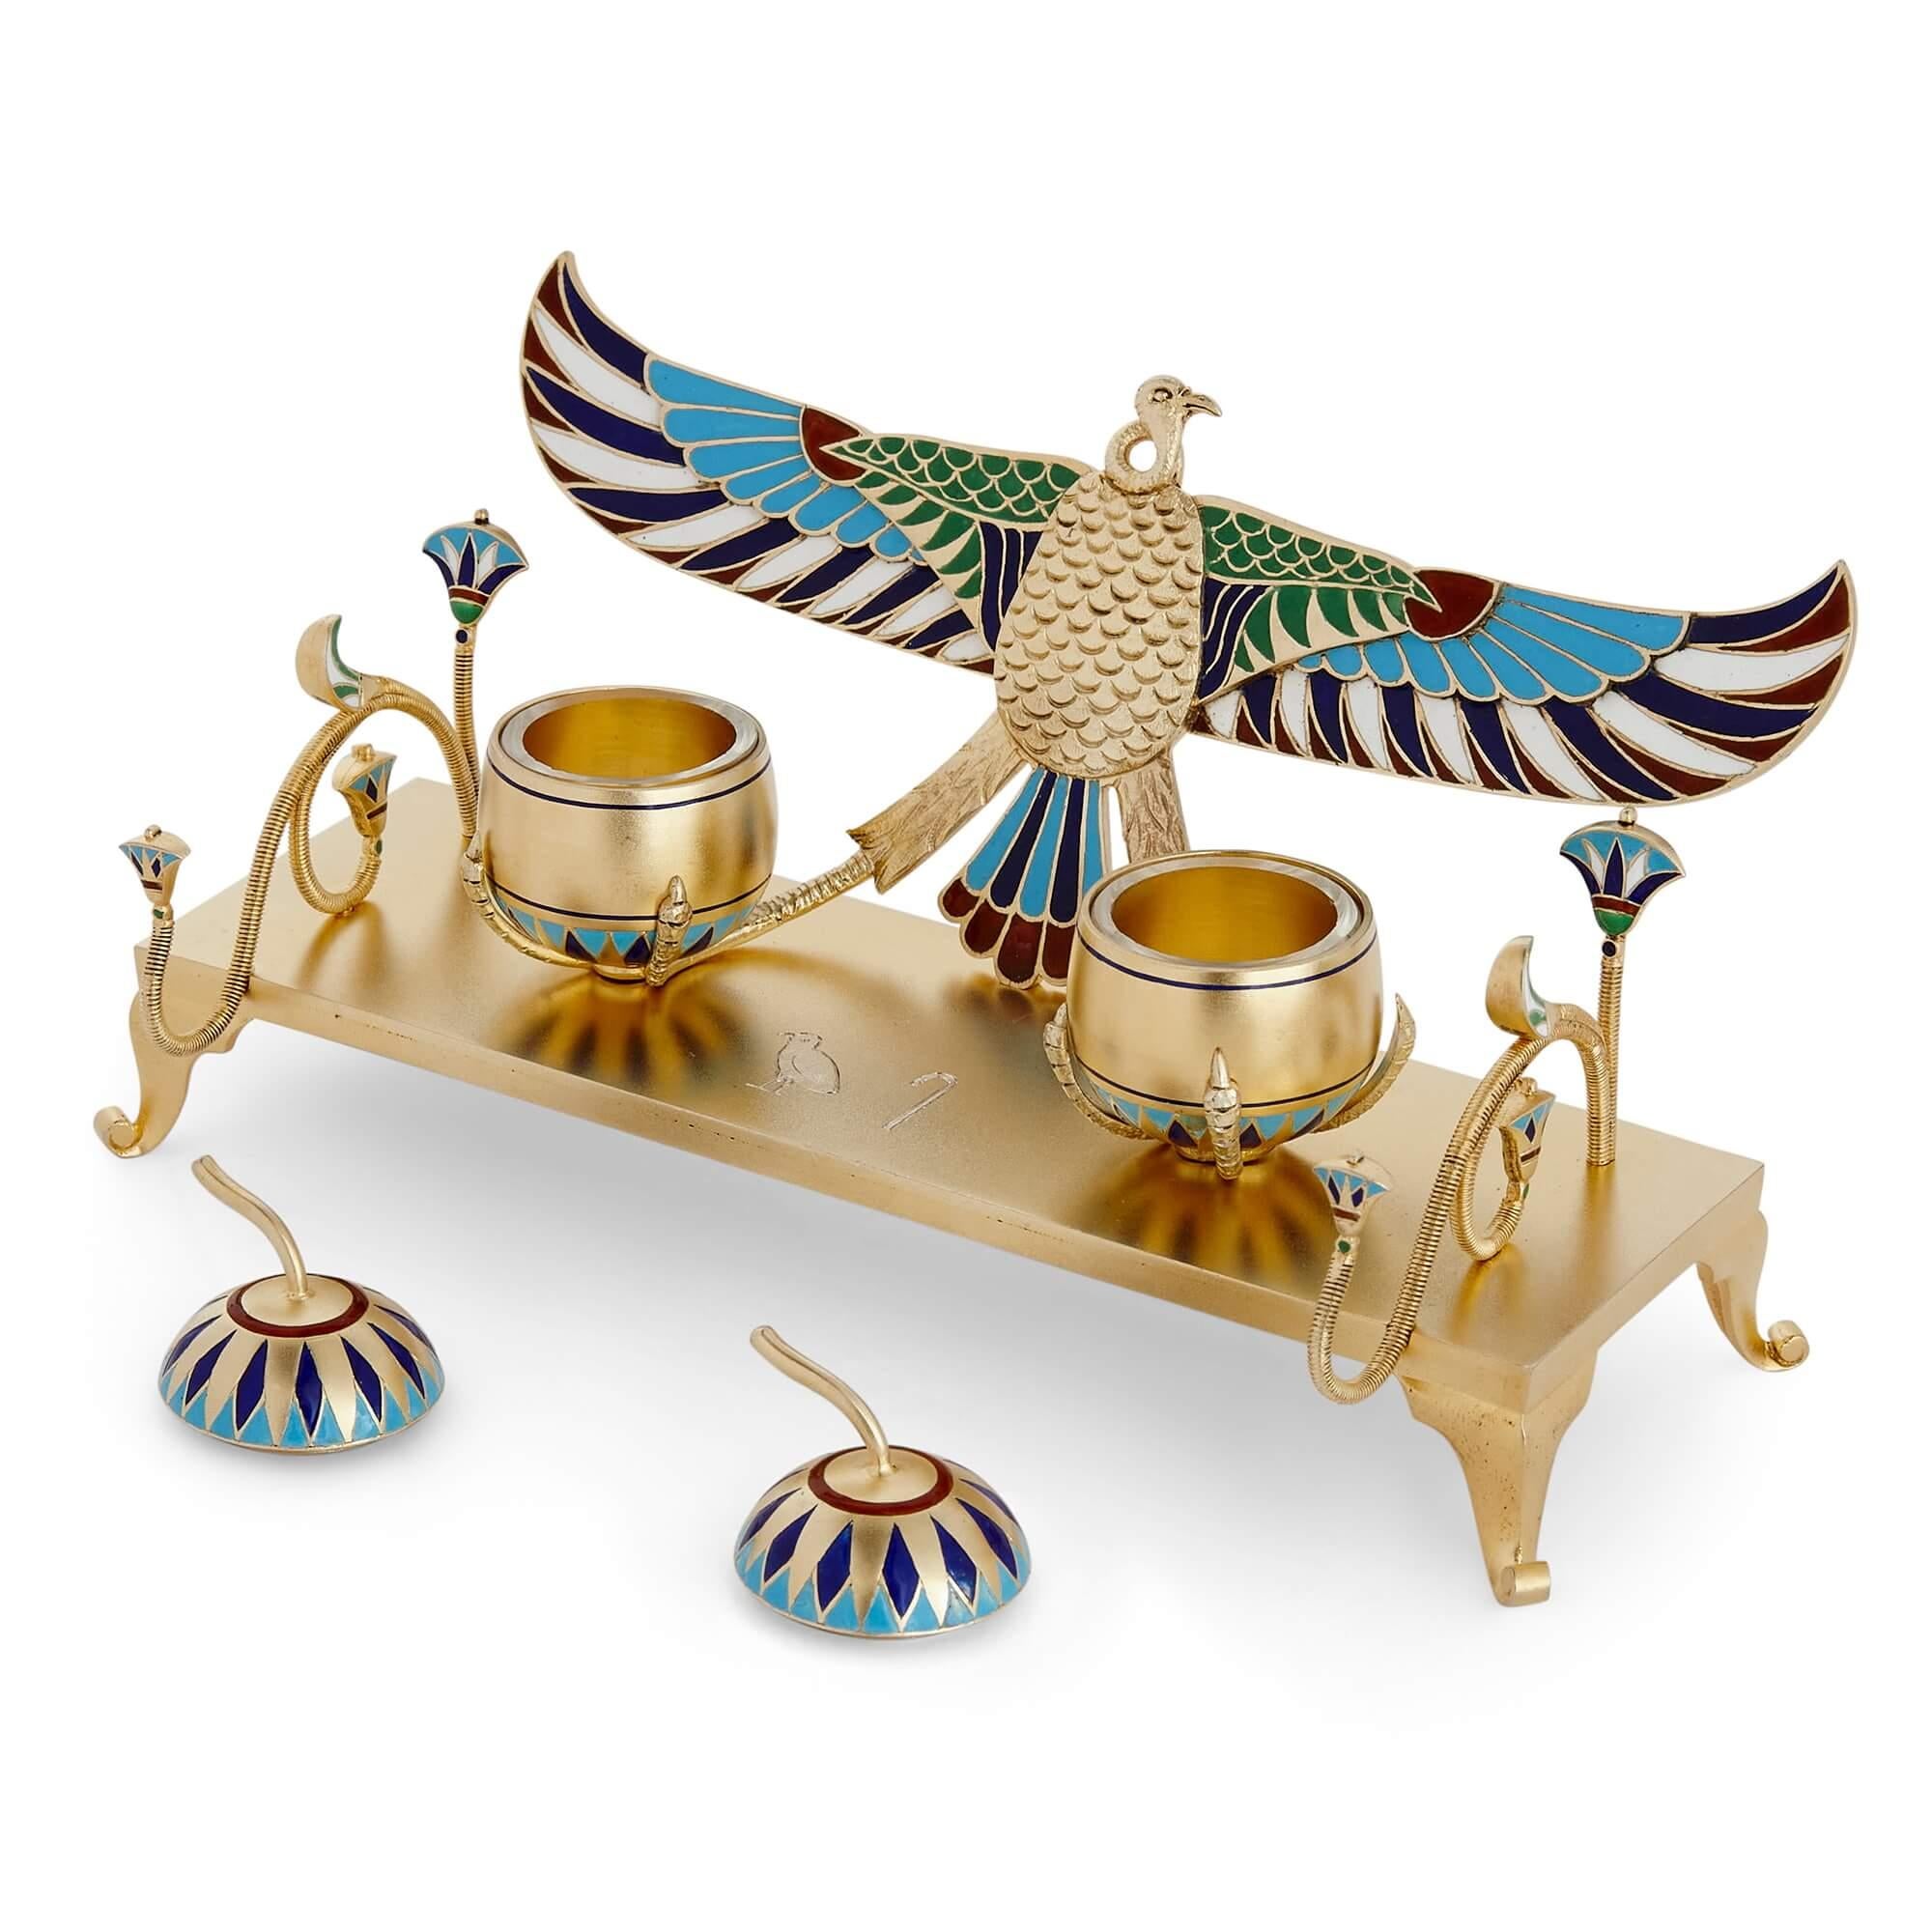 Egyptian Revival Art Deco period Egyptian revival style enamel and silver-gilt desk set For Sale